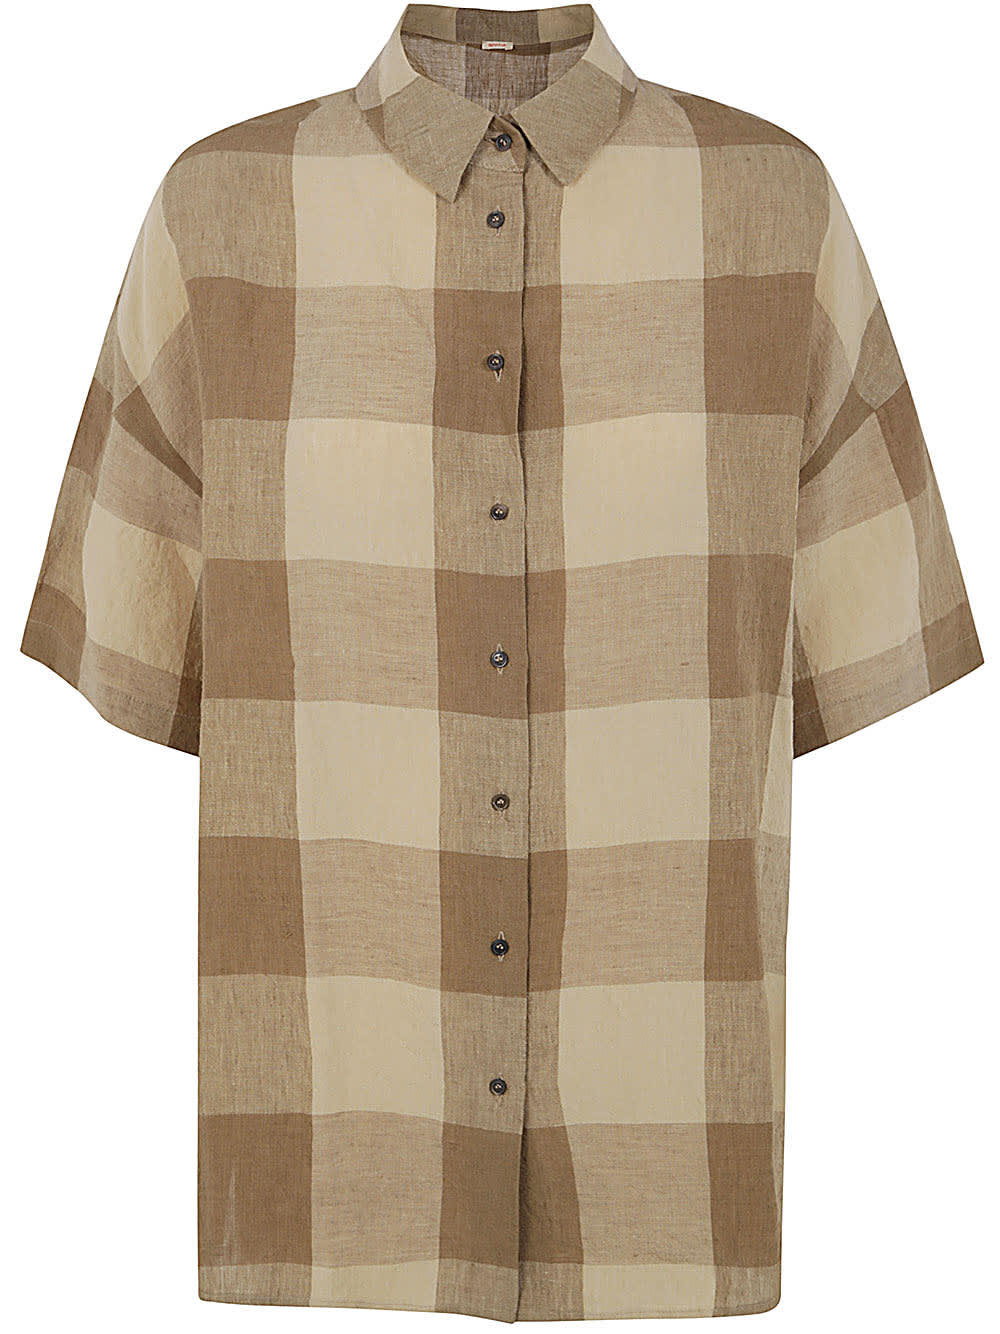 Apuntob Short Sleeves Shirt In Hazelnut